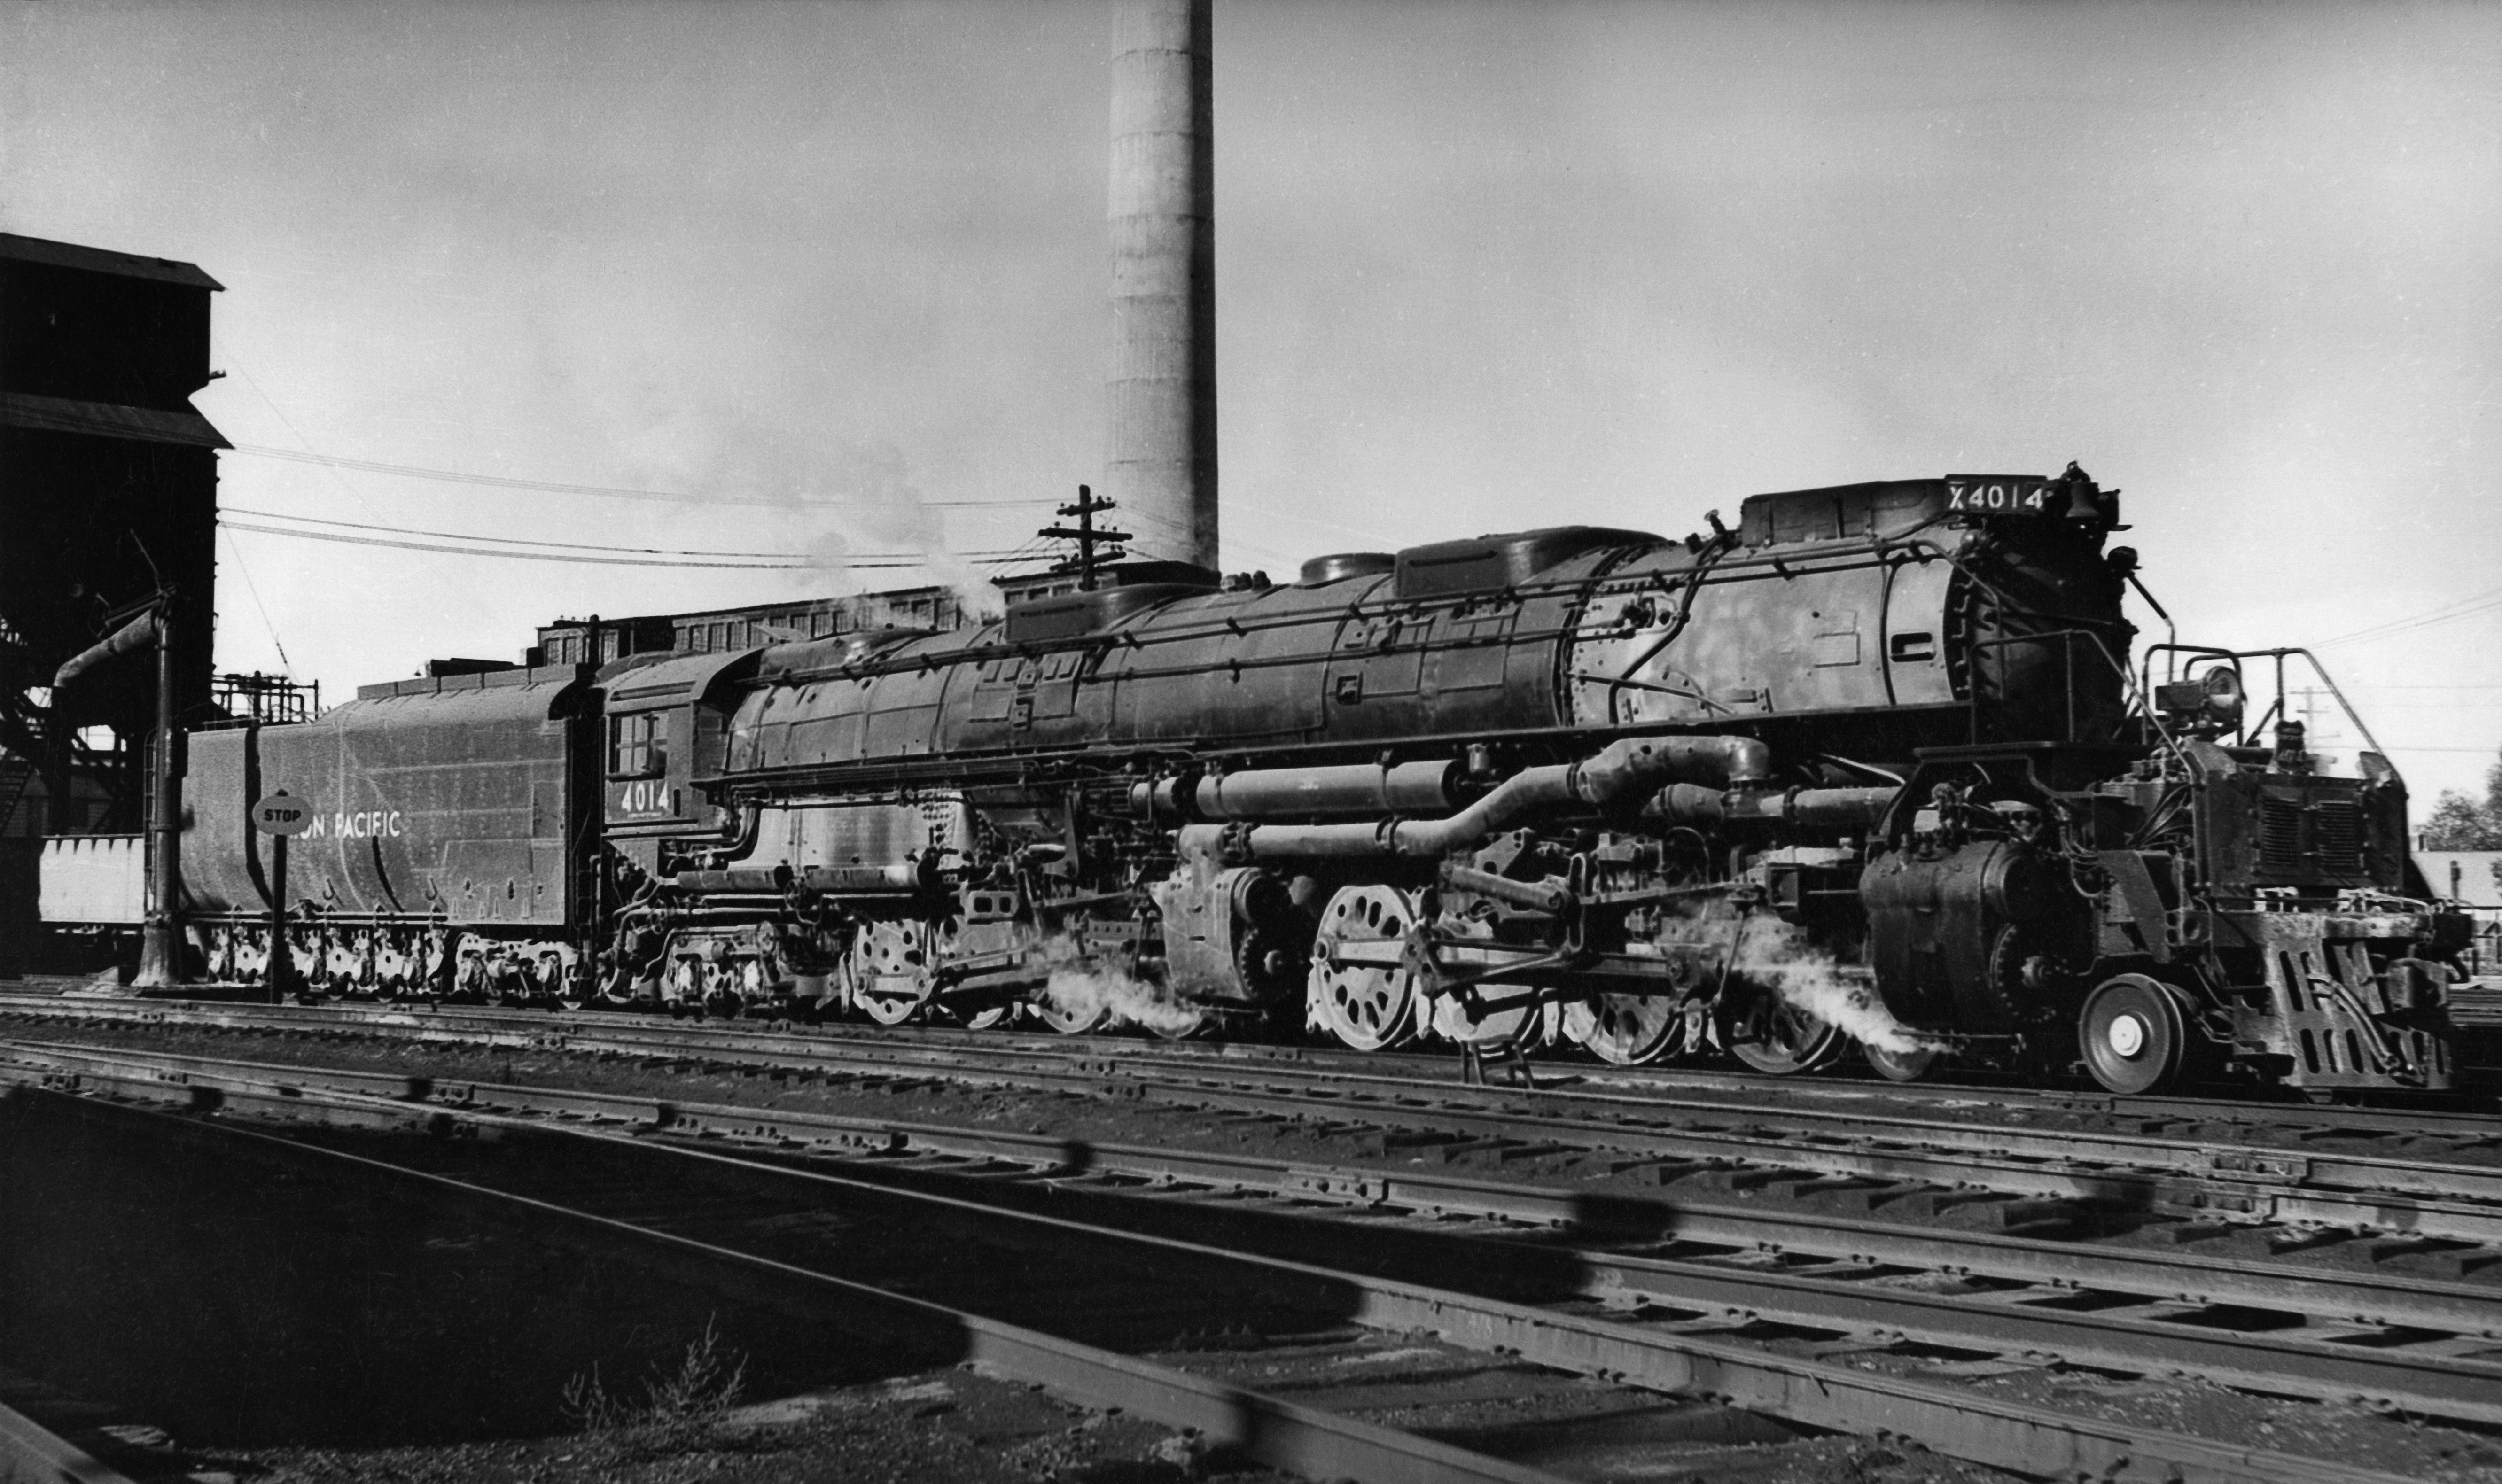 Union Pacific Big Boy #4014 Steam Train Locomotive Ceramic Tile Set with Cork 